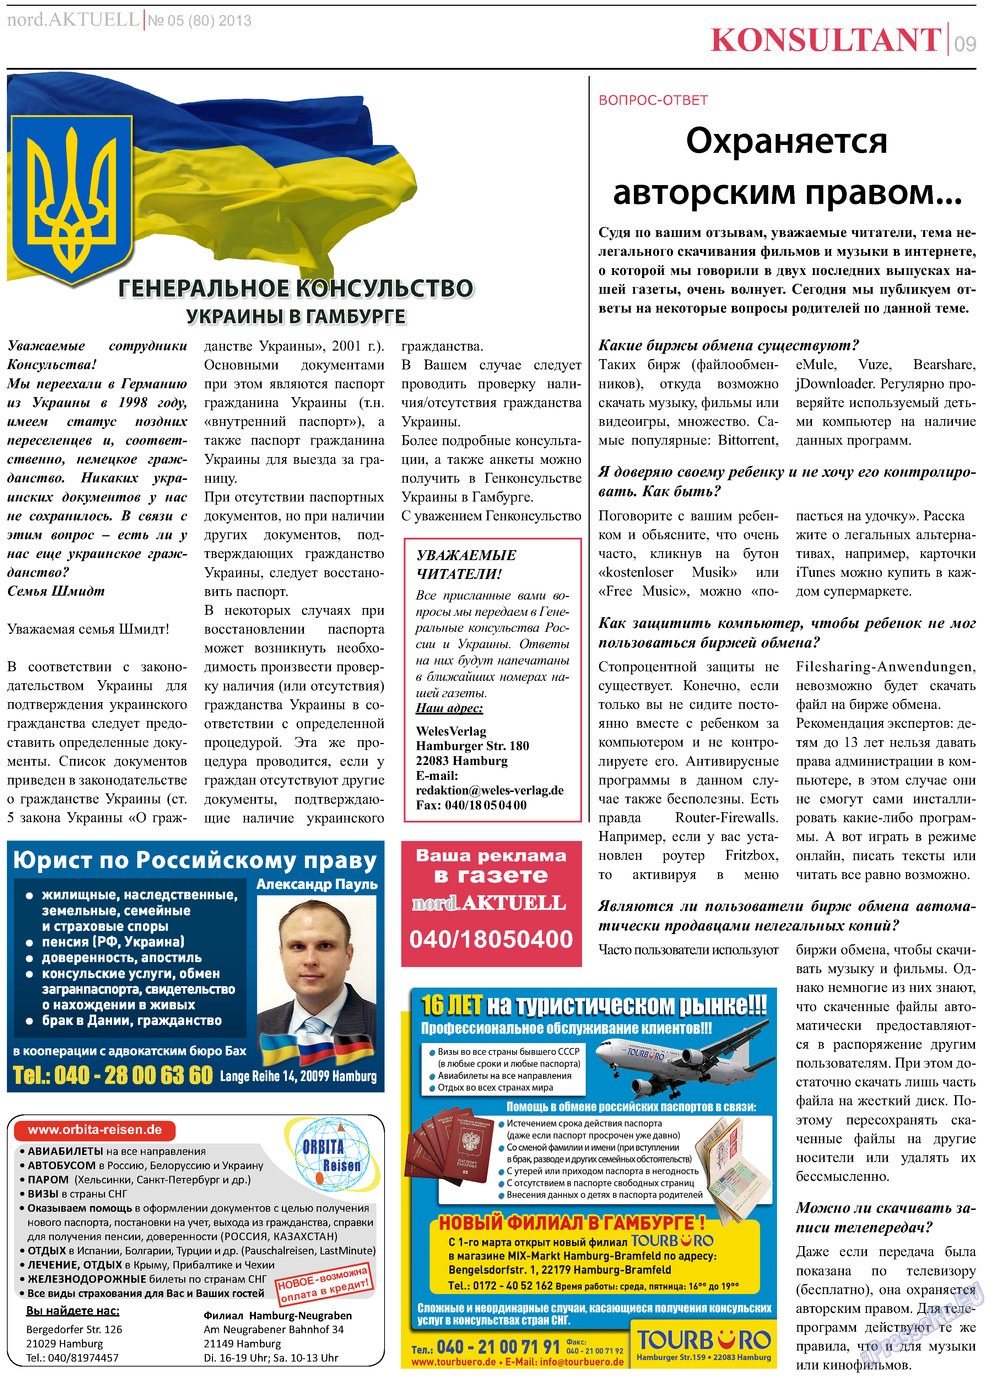 nord.Aktuell, газета. 2013 №5 стр.9